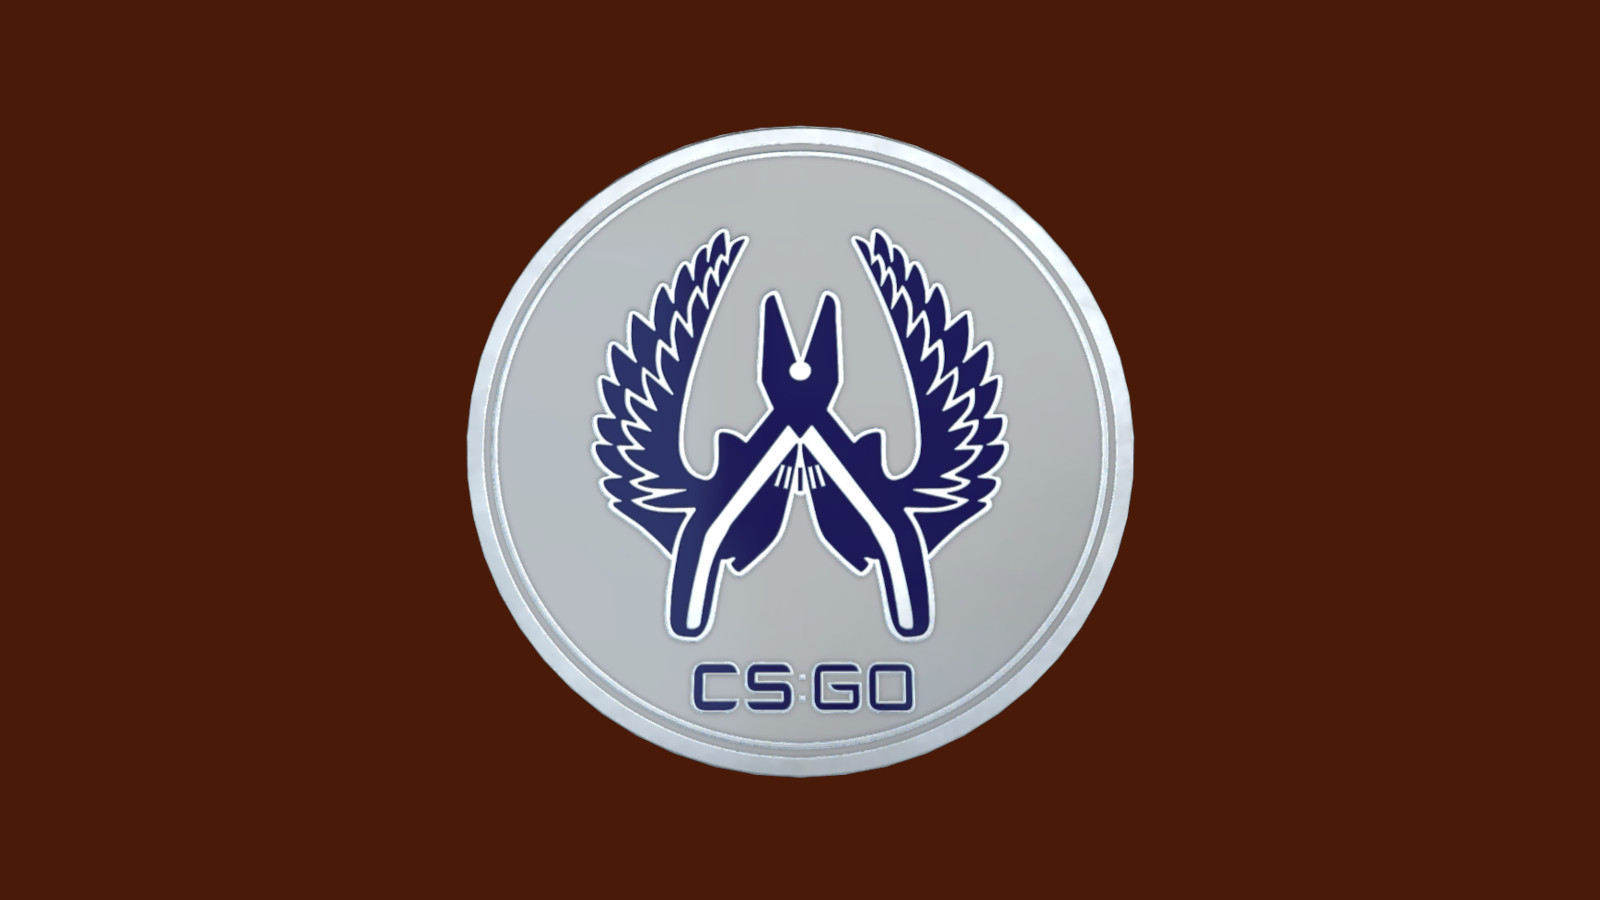 CS:GO - Series 3 - Guardian 3 Collectible Pin 225.98 usd